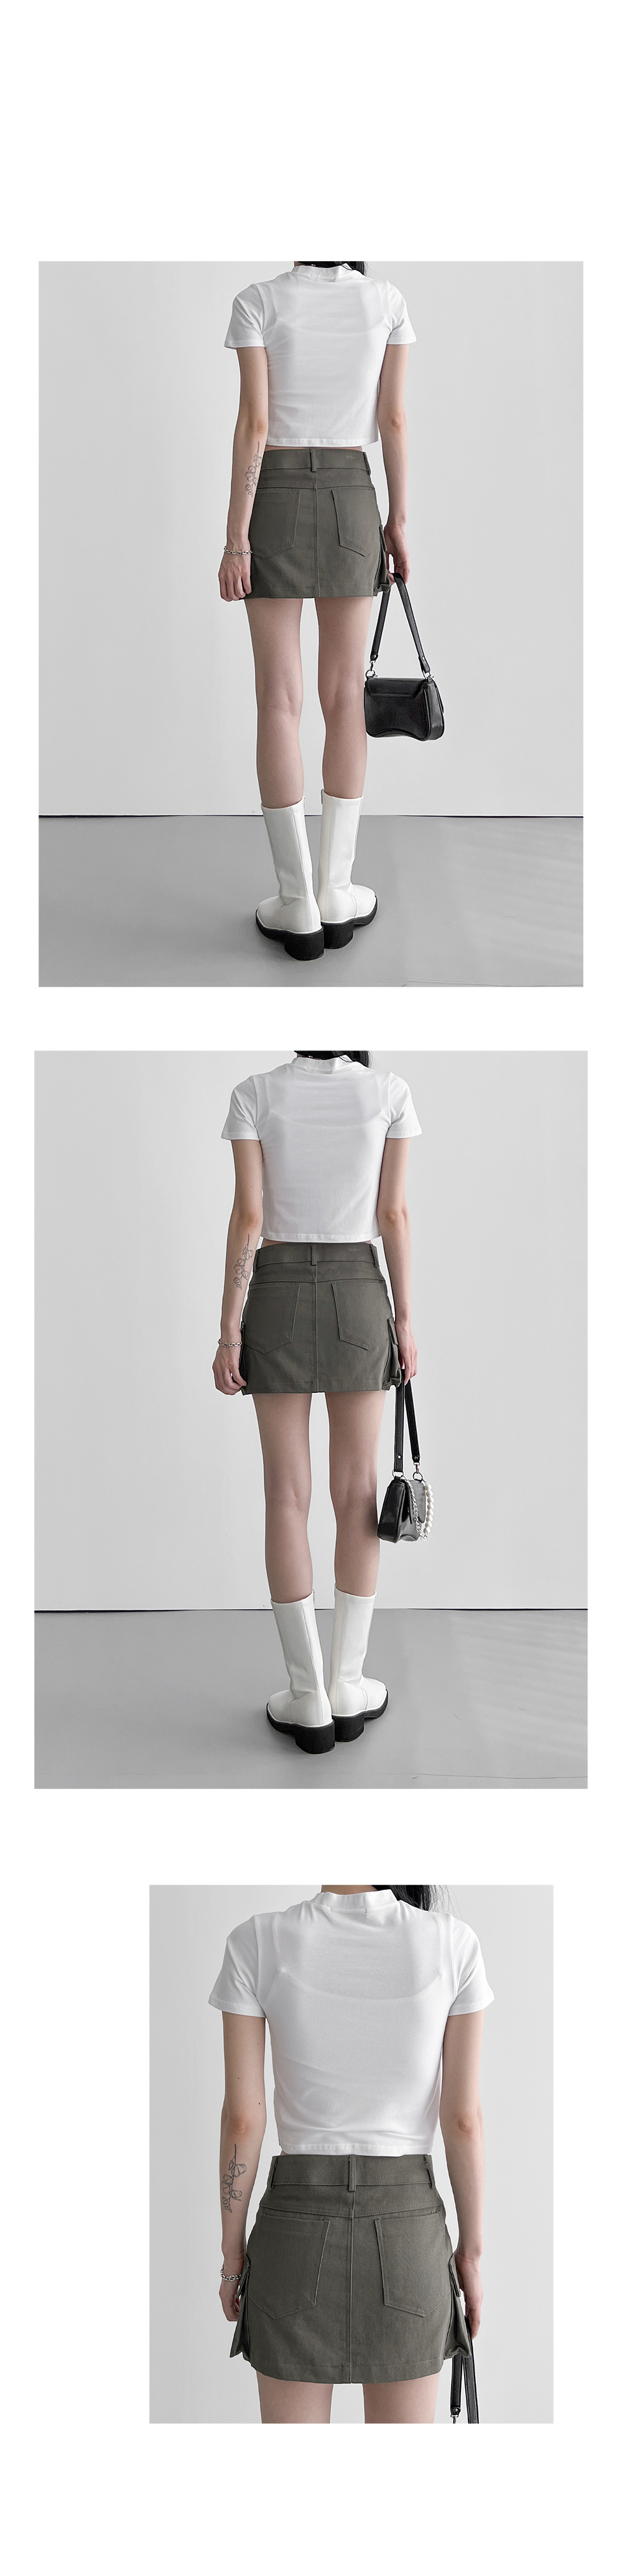 mini skirt model image-S1L8